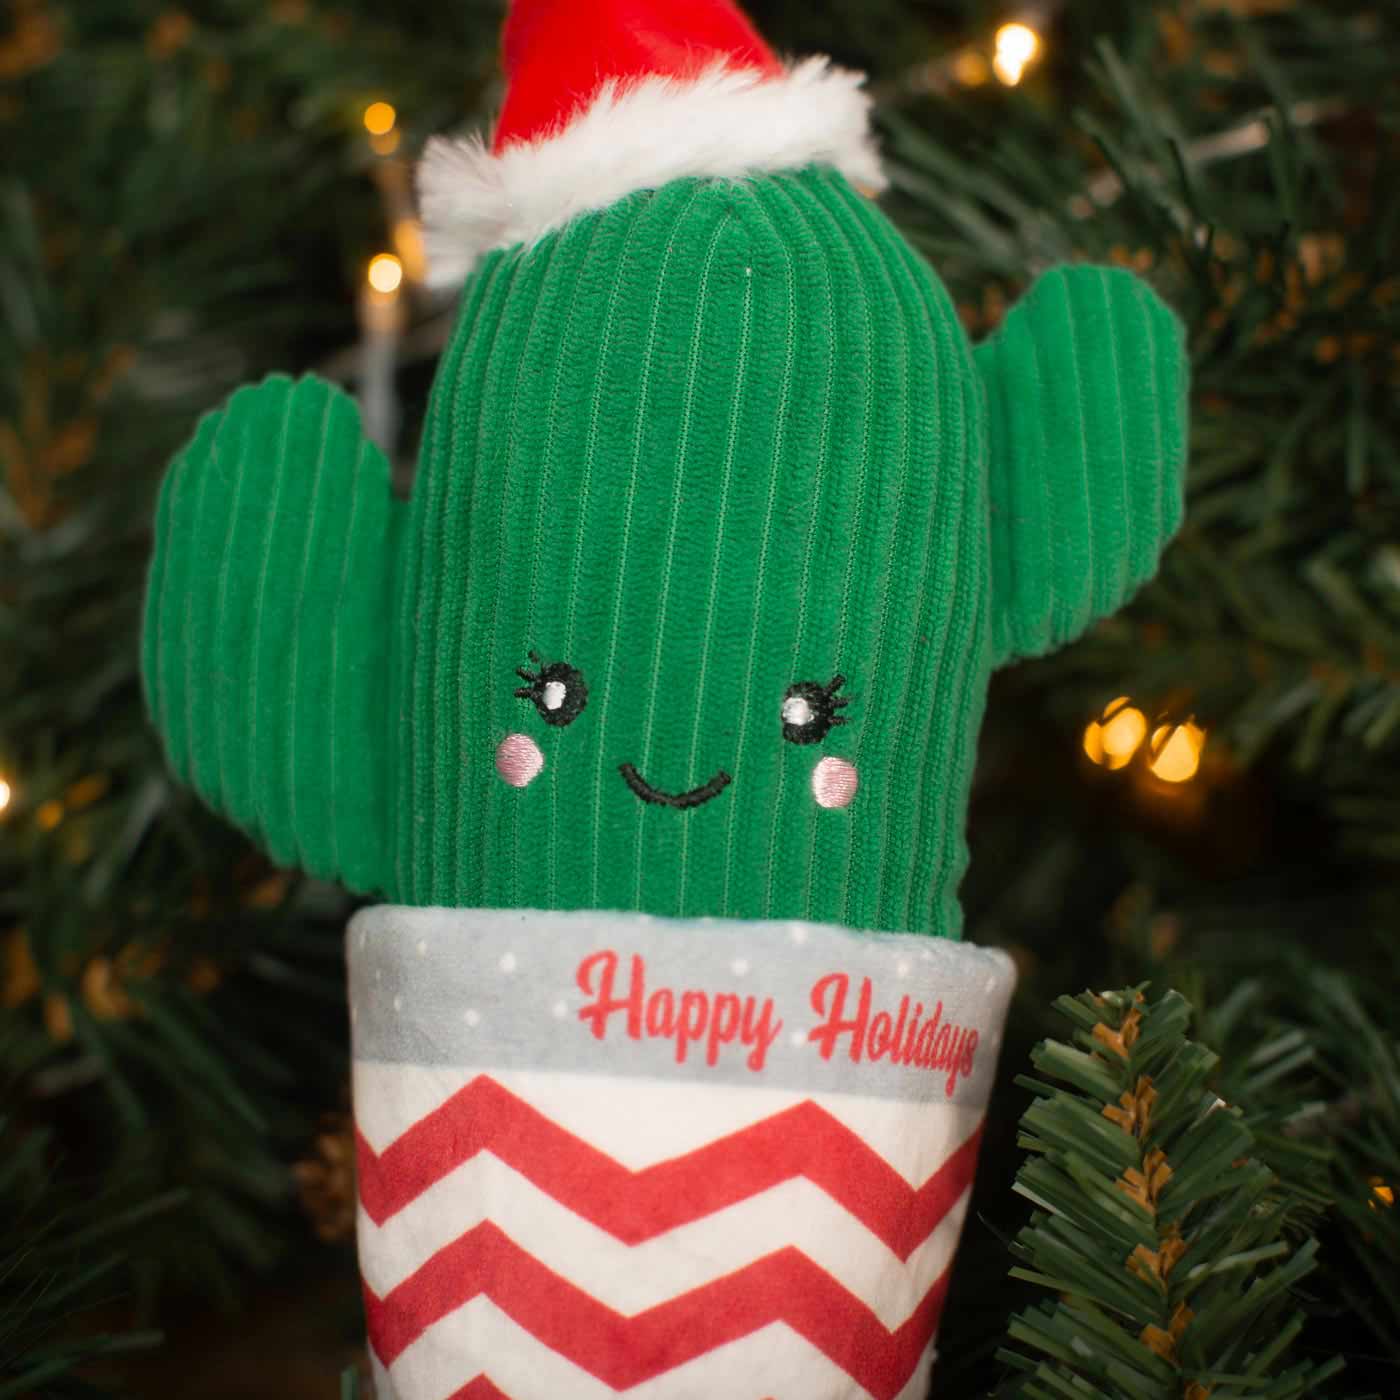 KONG Holiday Wrangler Cactus